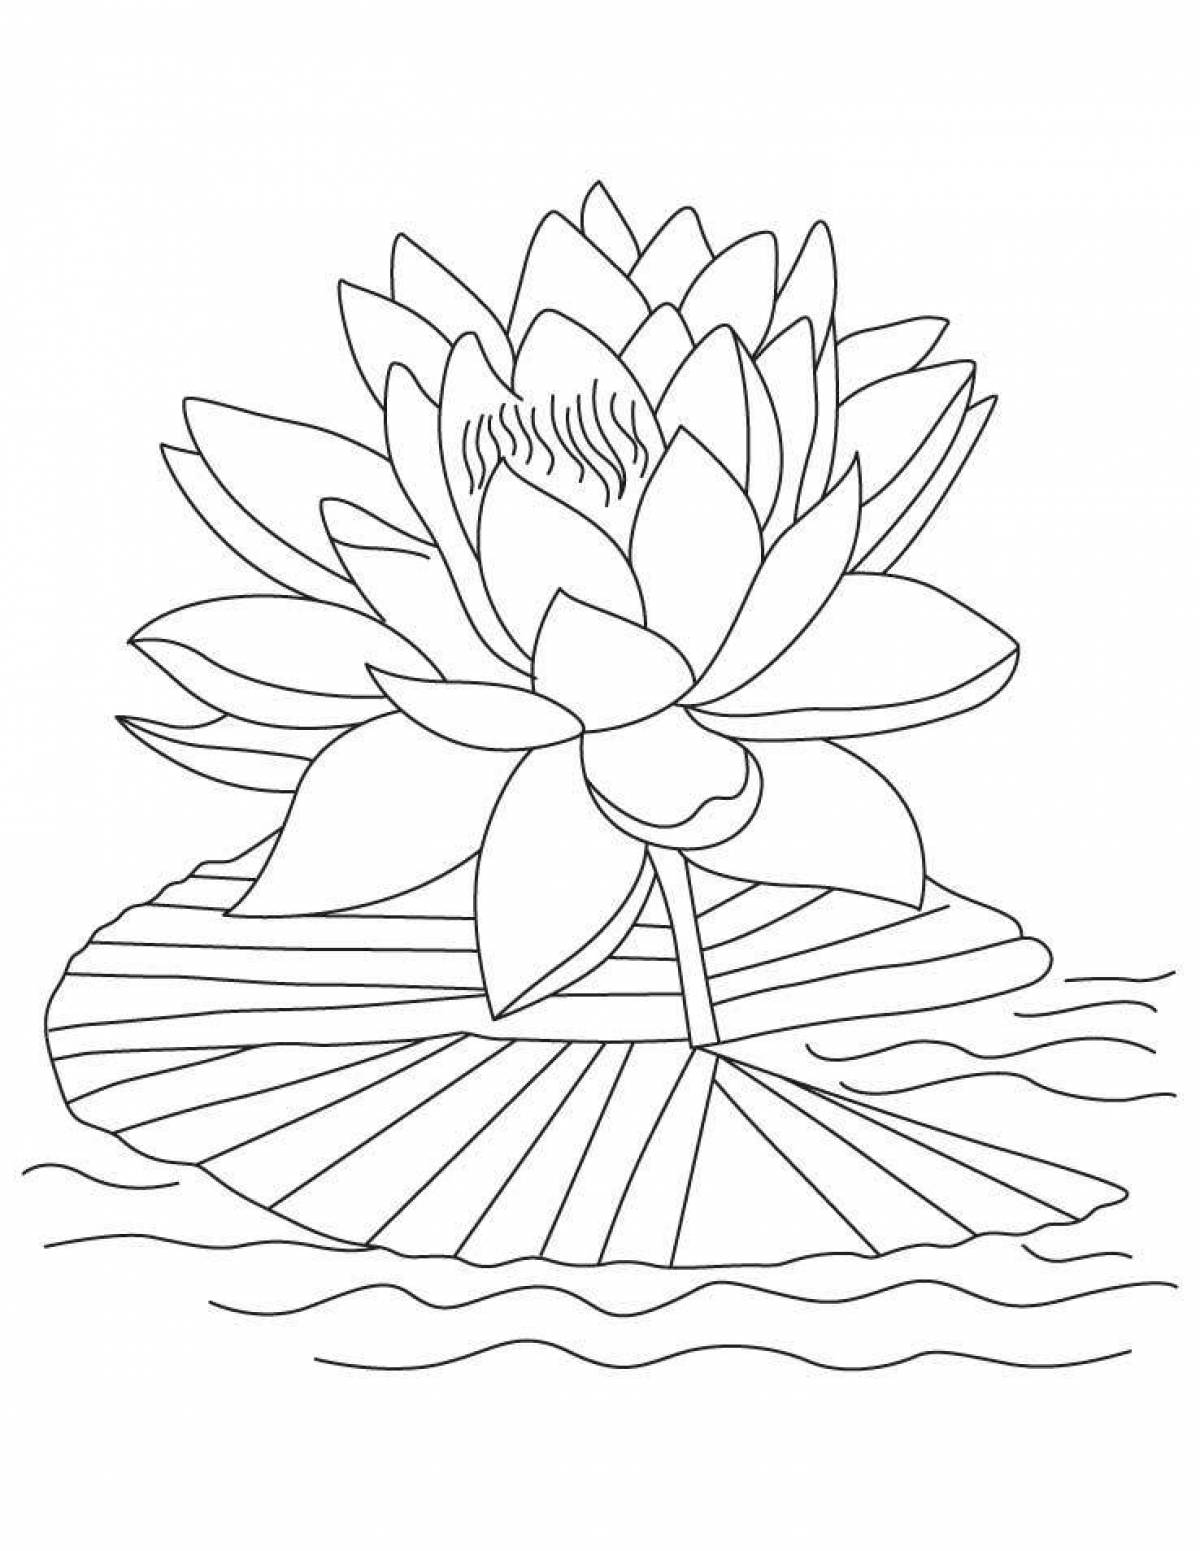 Coloring book piercing lotus